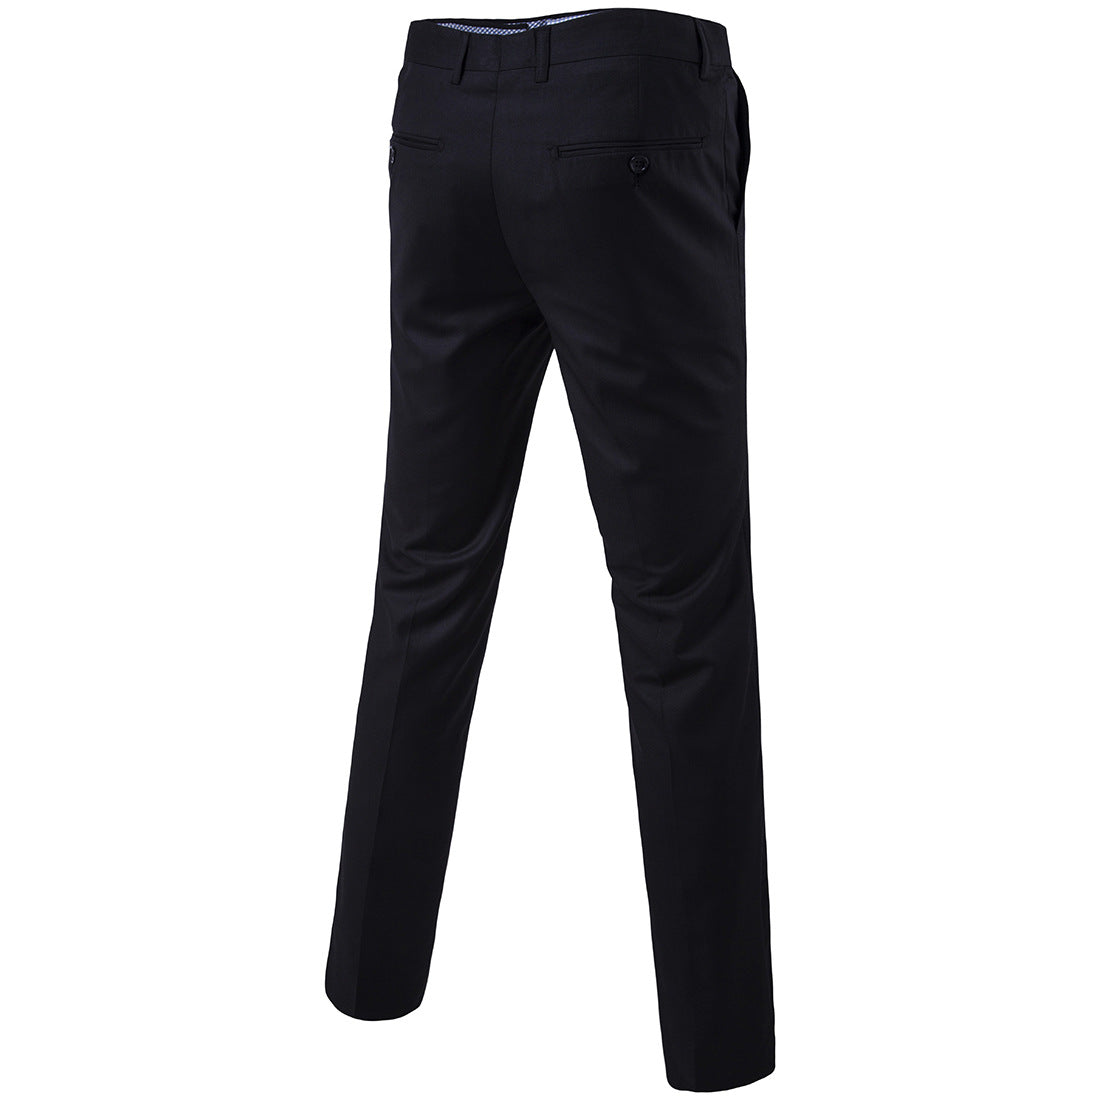 LANBAOSI Men's Classic Slim Fit Solid Business Trousers LANBAOSI